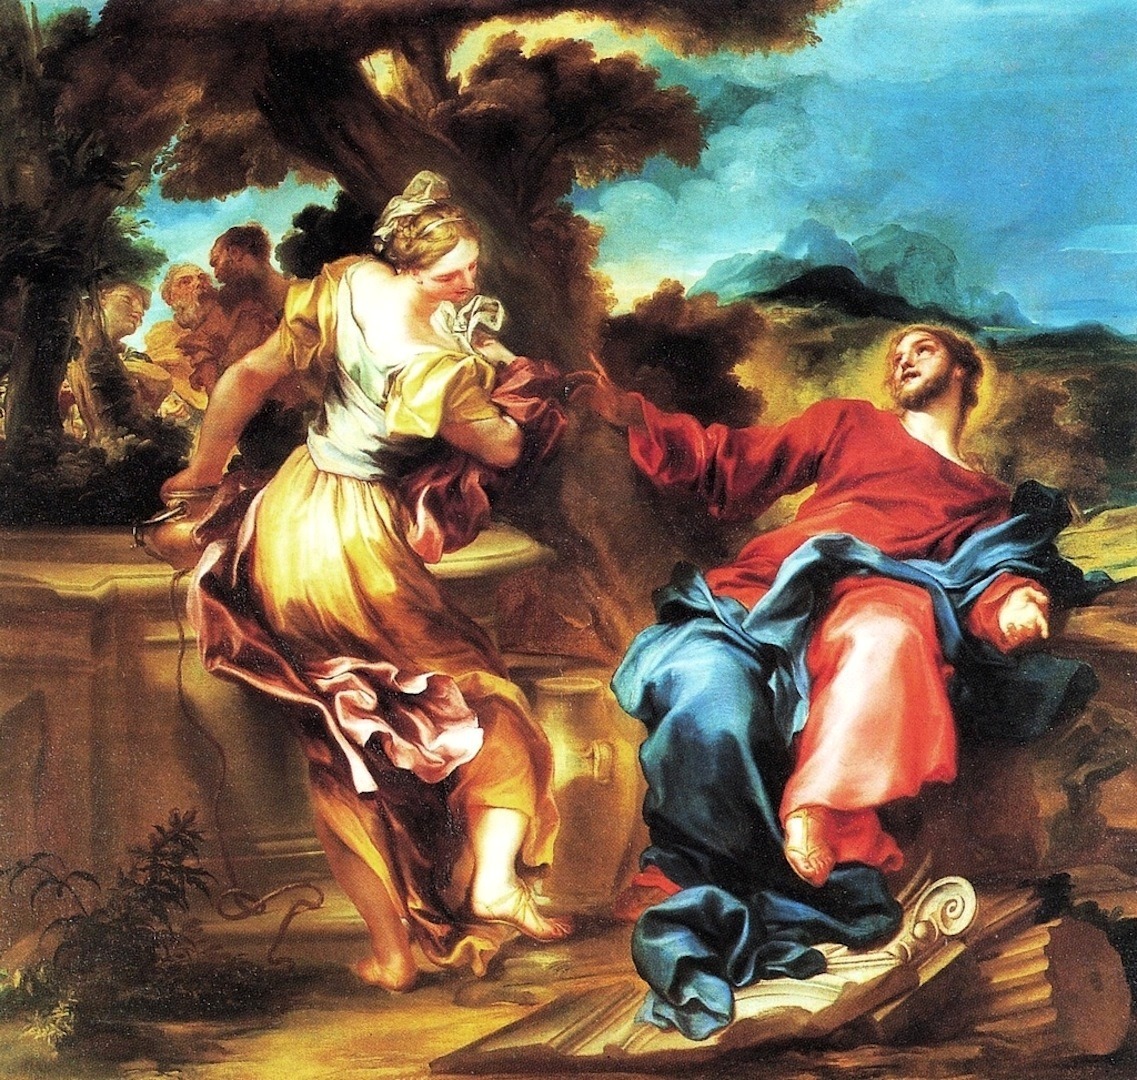 Gregorio de Ferrari, Christ and the Samaritan Woman, c. 1690-1700